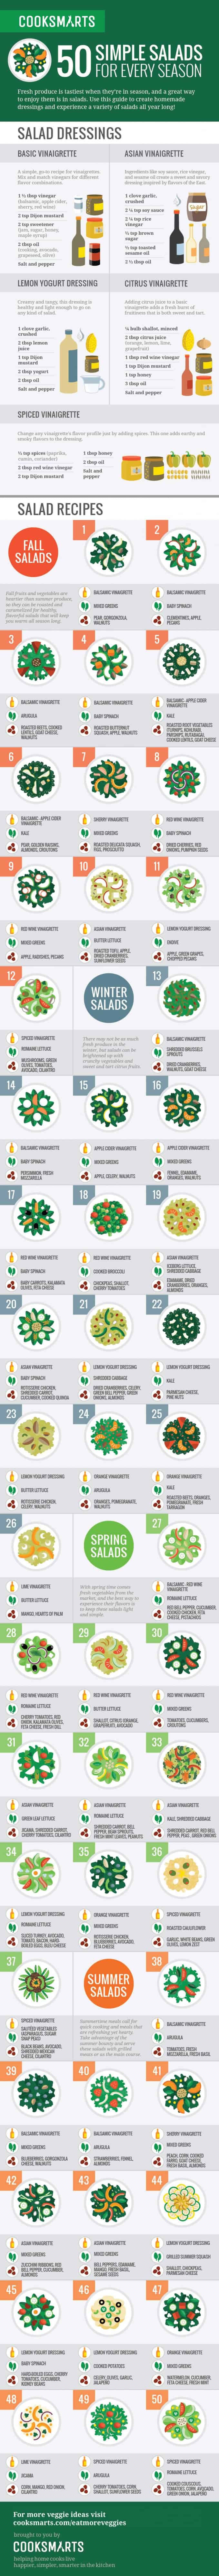 50 salad ideas infographic